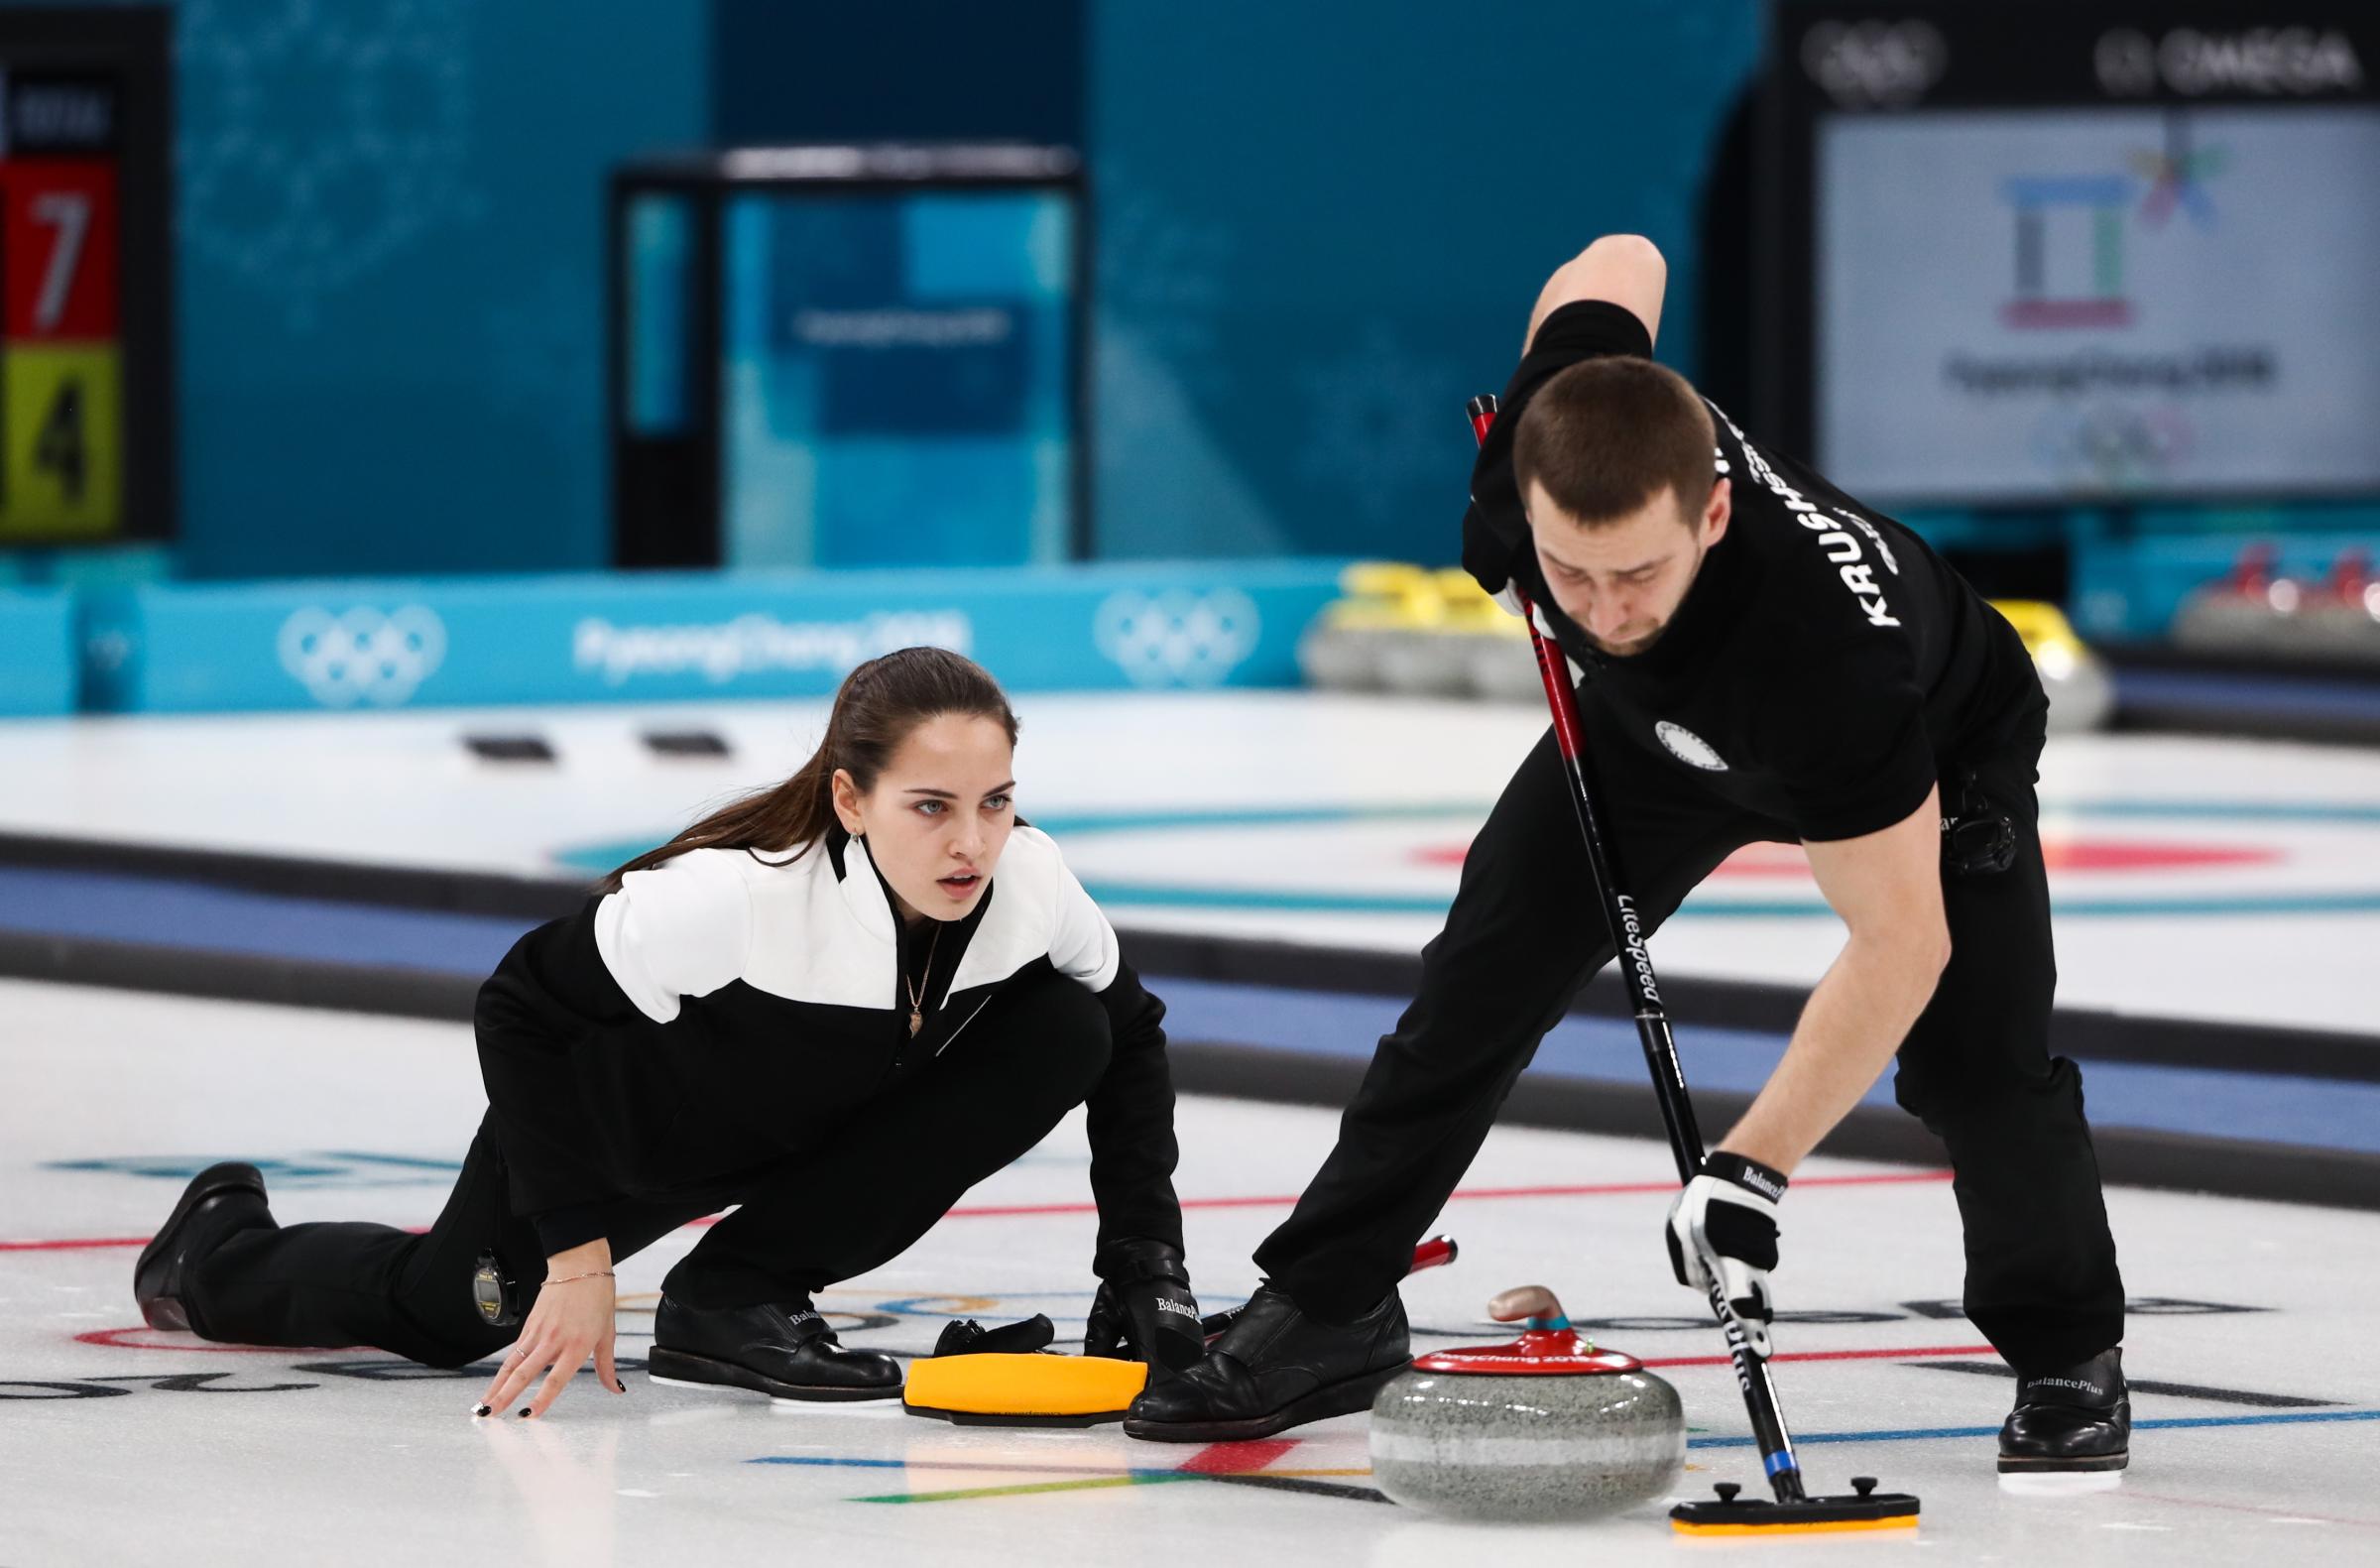 PyeongChang 2018 Winter Olympics: mixed doubles curling, bronze medal match